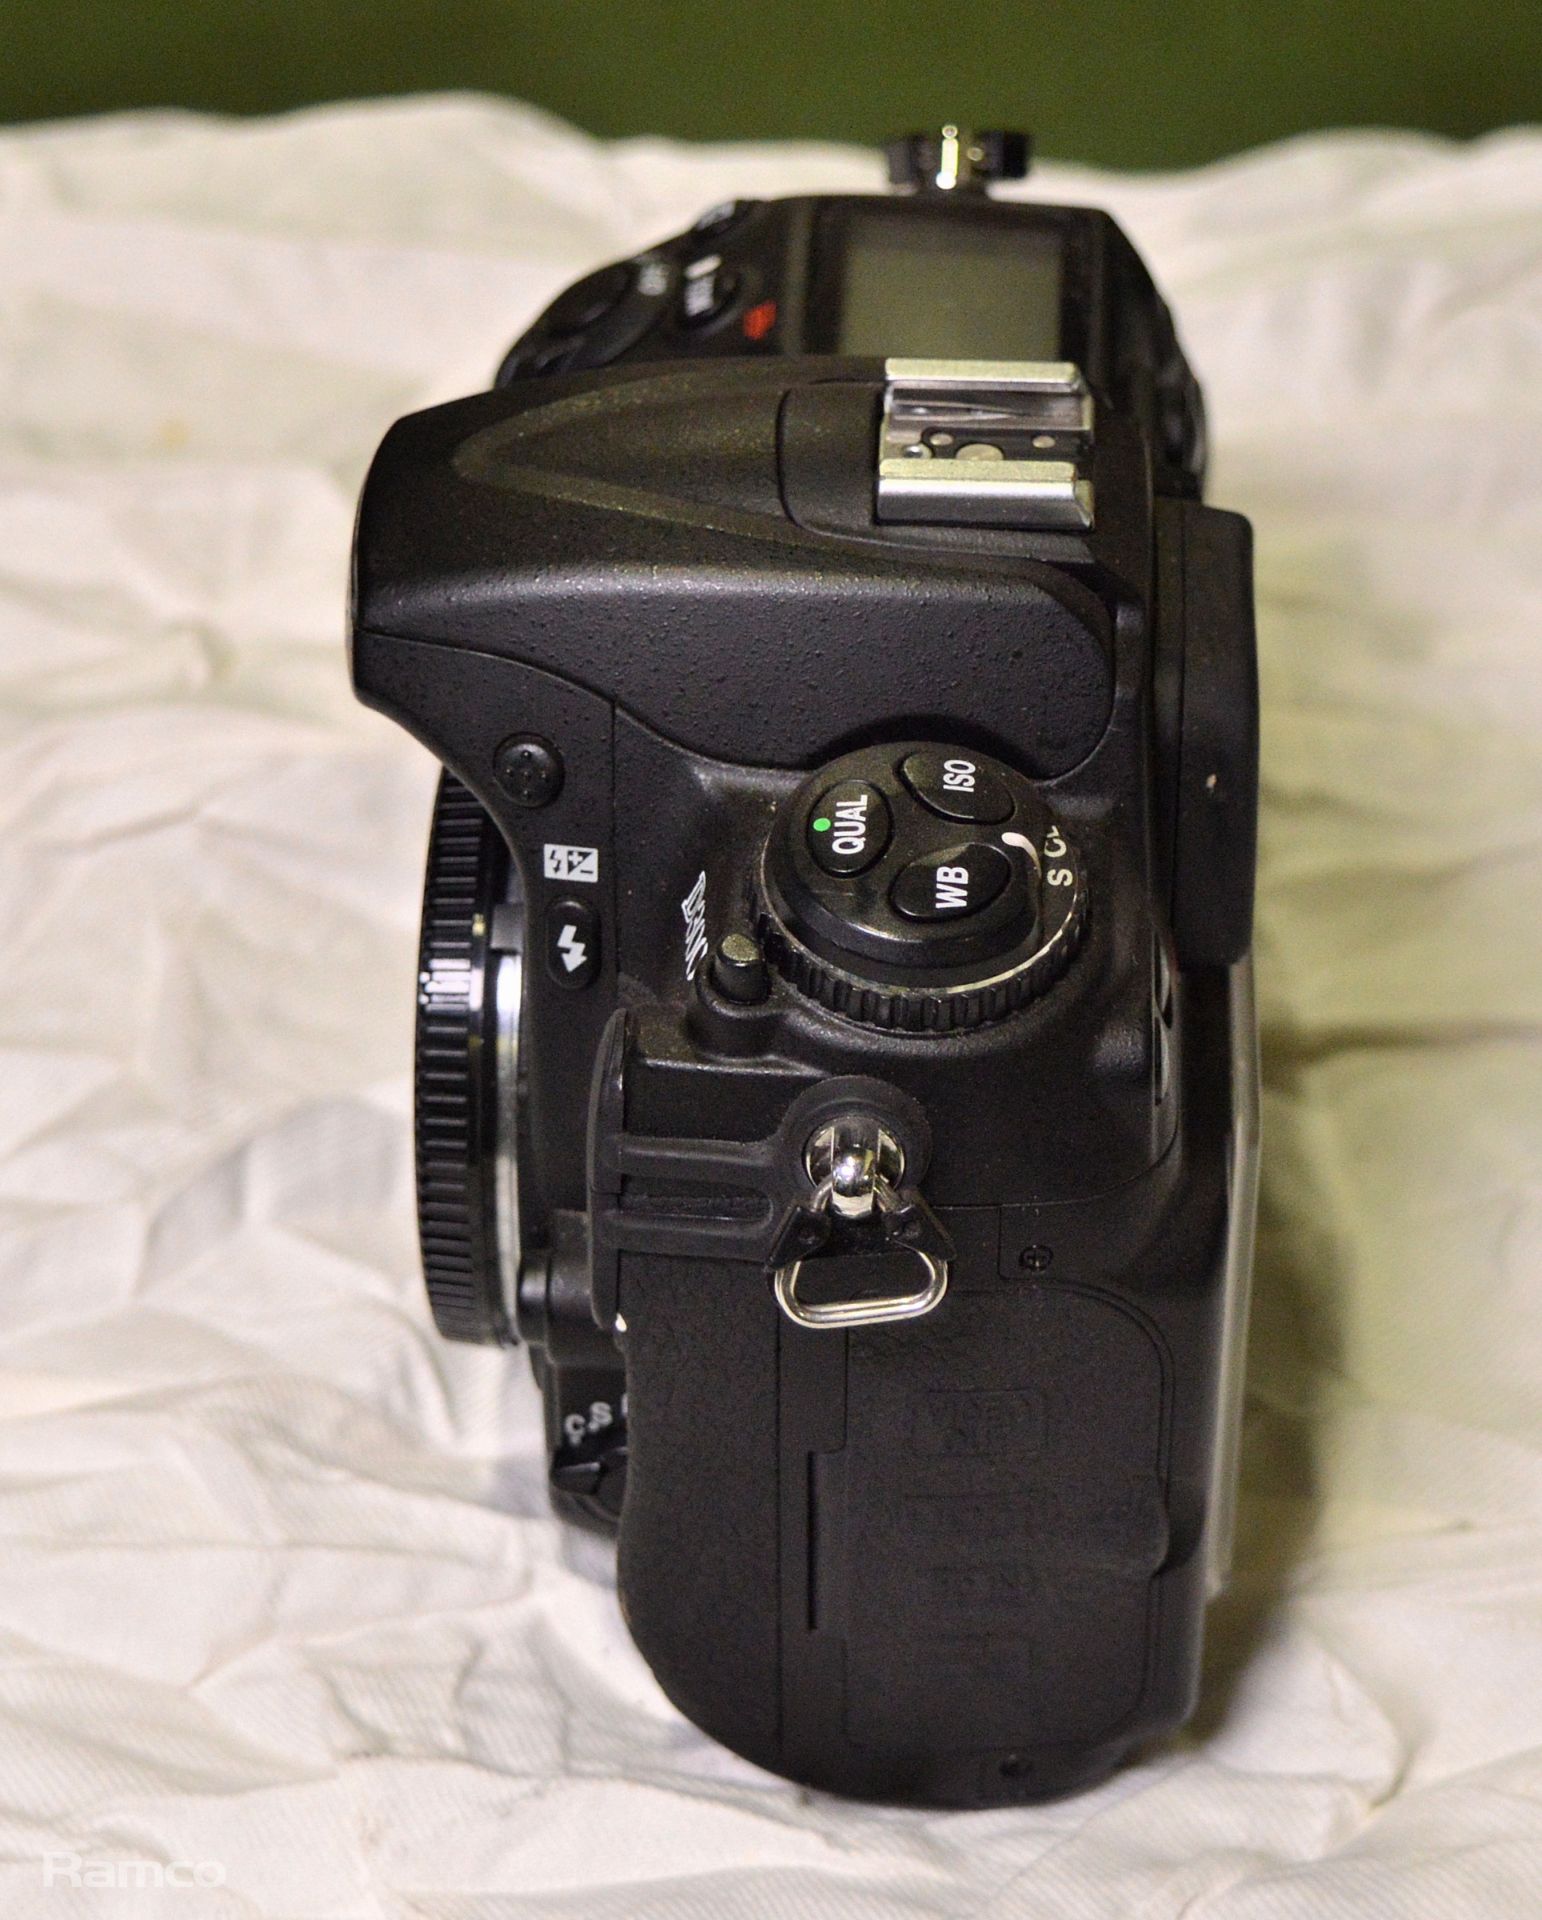 Nikon D300 SLR Digital Camera Body - Image 5 of 8